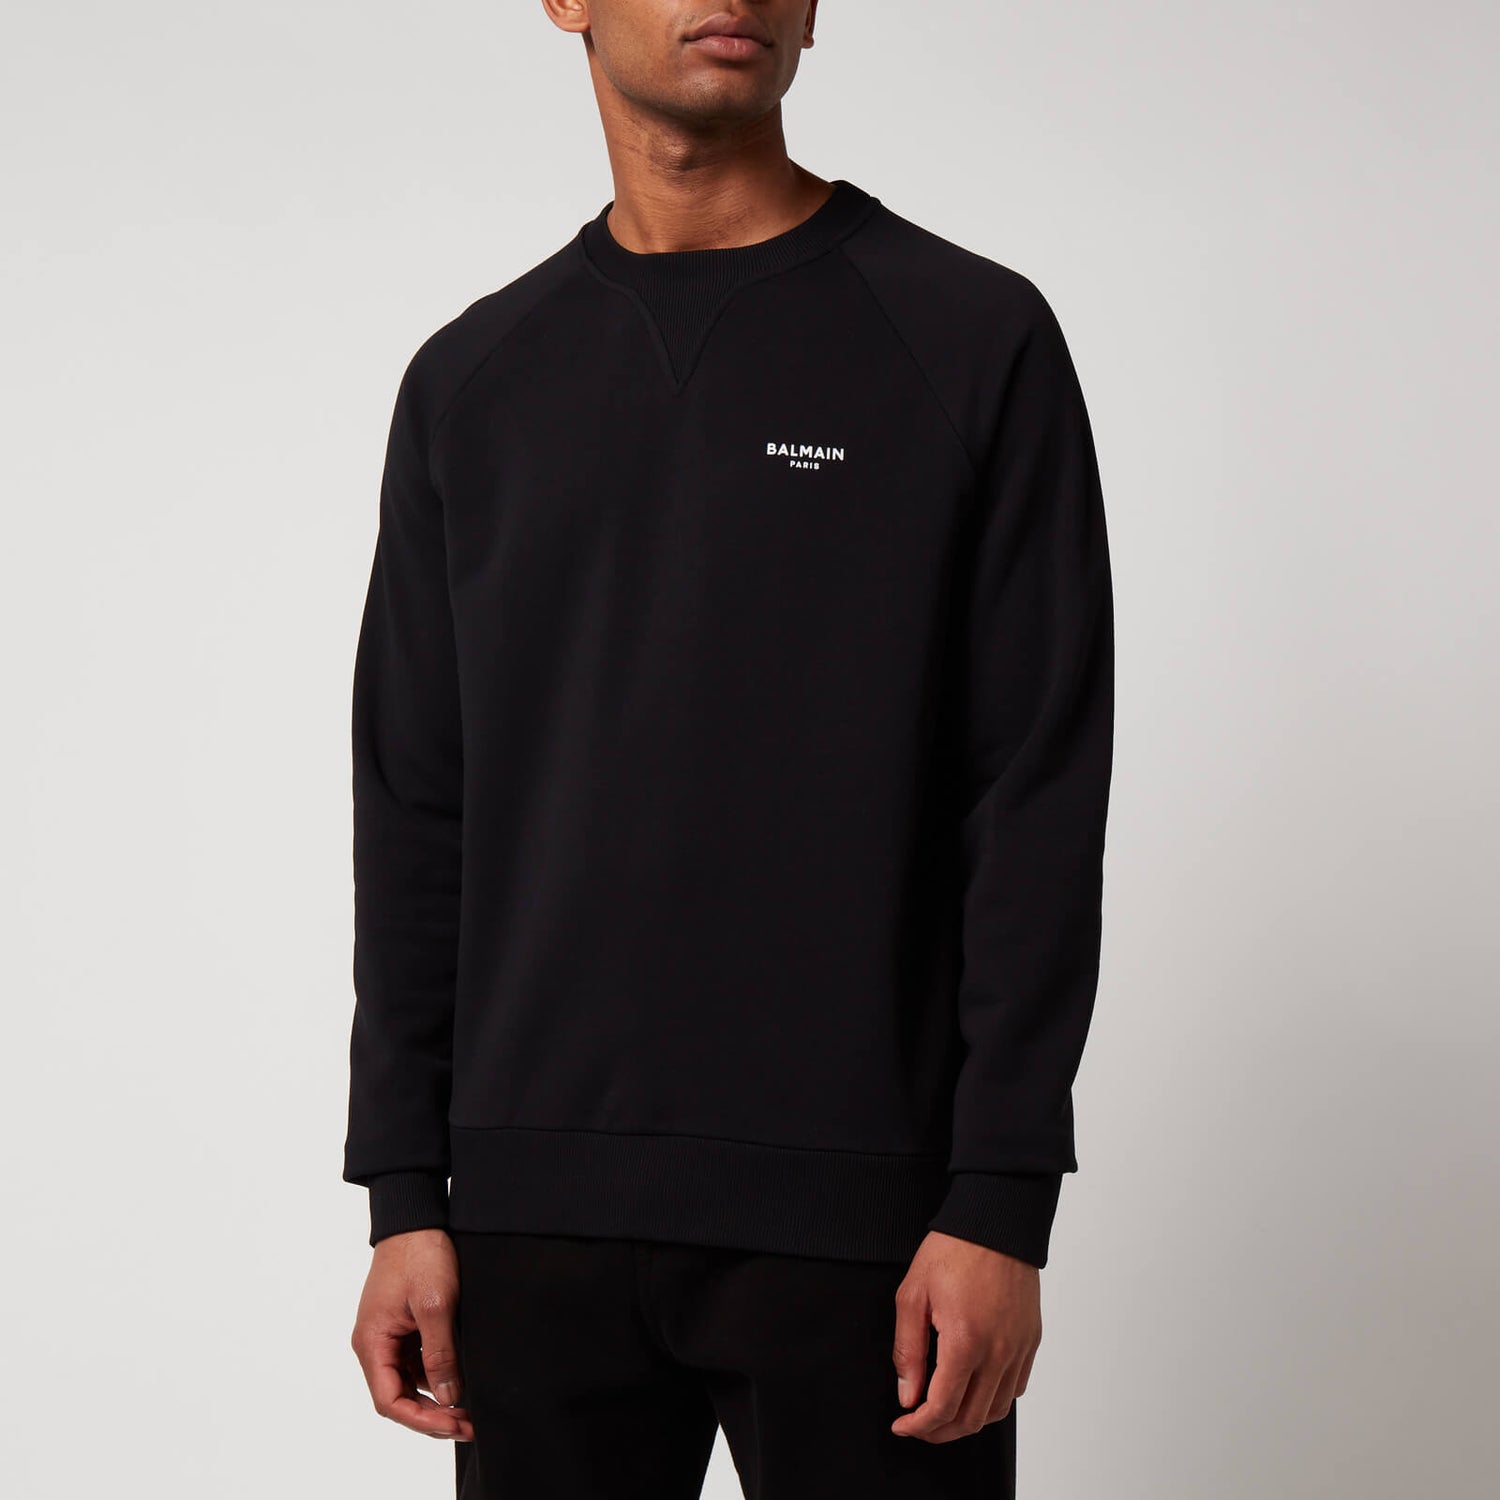 Balmain Men's Flock Sweatshirt - Black/White